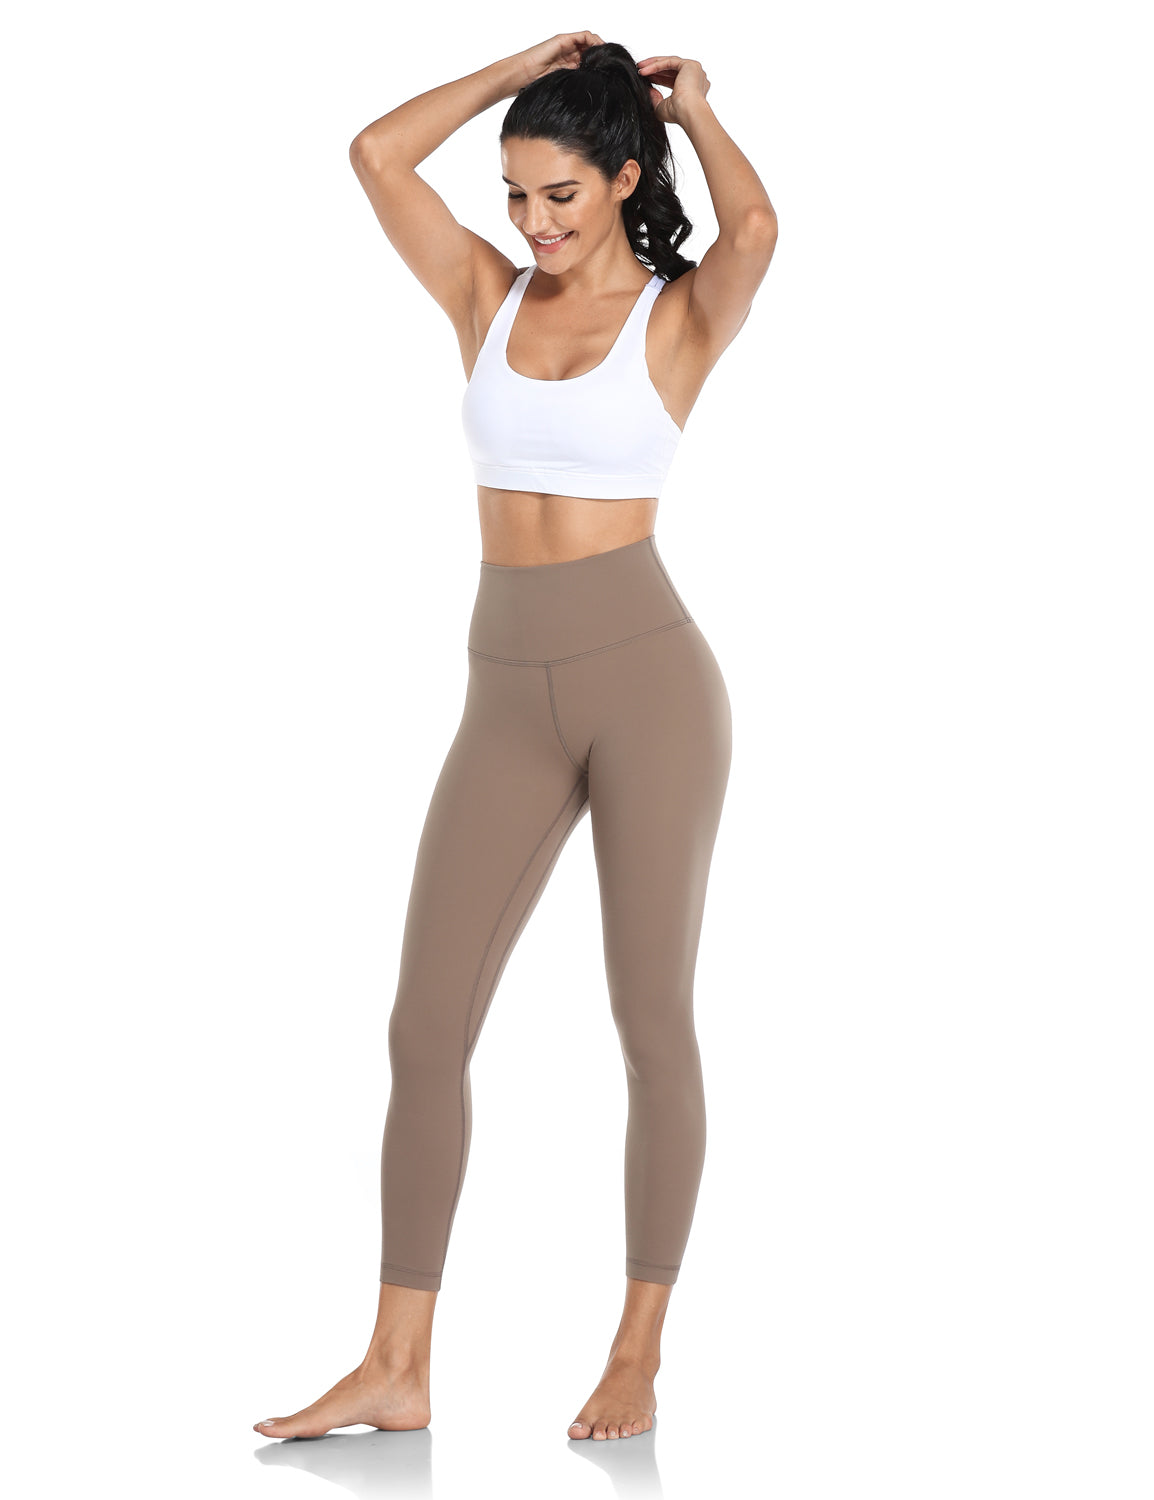 HeyNuts Essential 7/8 Leggings, Buttery Soft Yoga Pants Tummy Control  Workout Pants 25'', Black, S price in UAE,  UAE